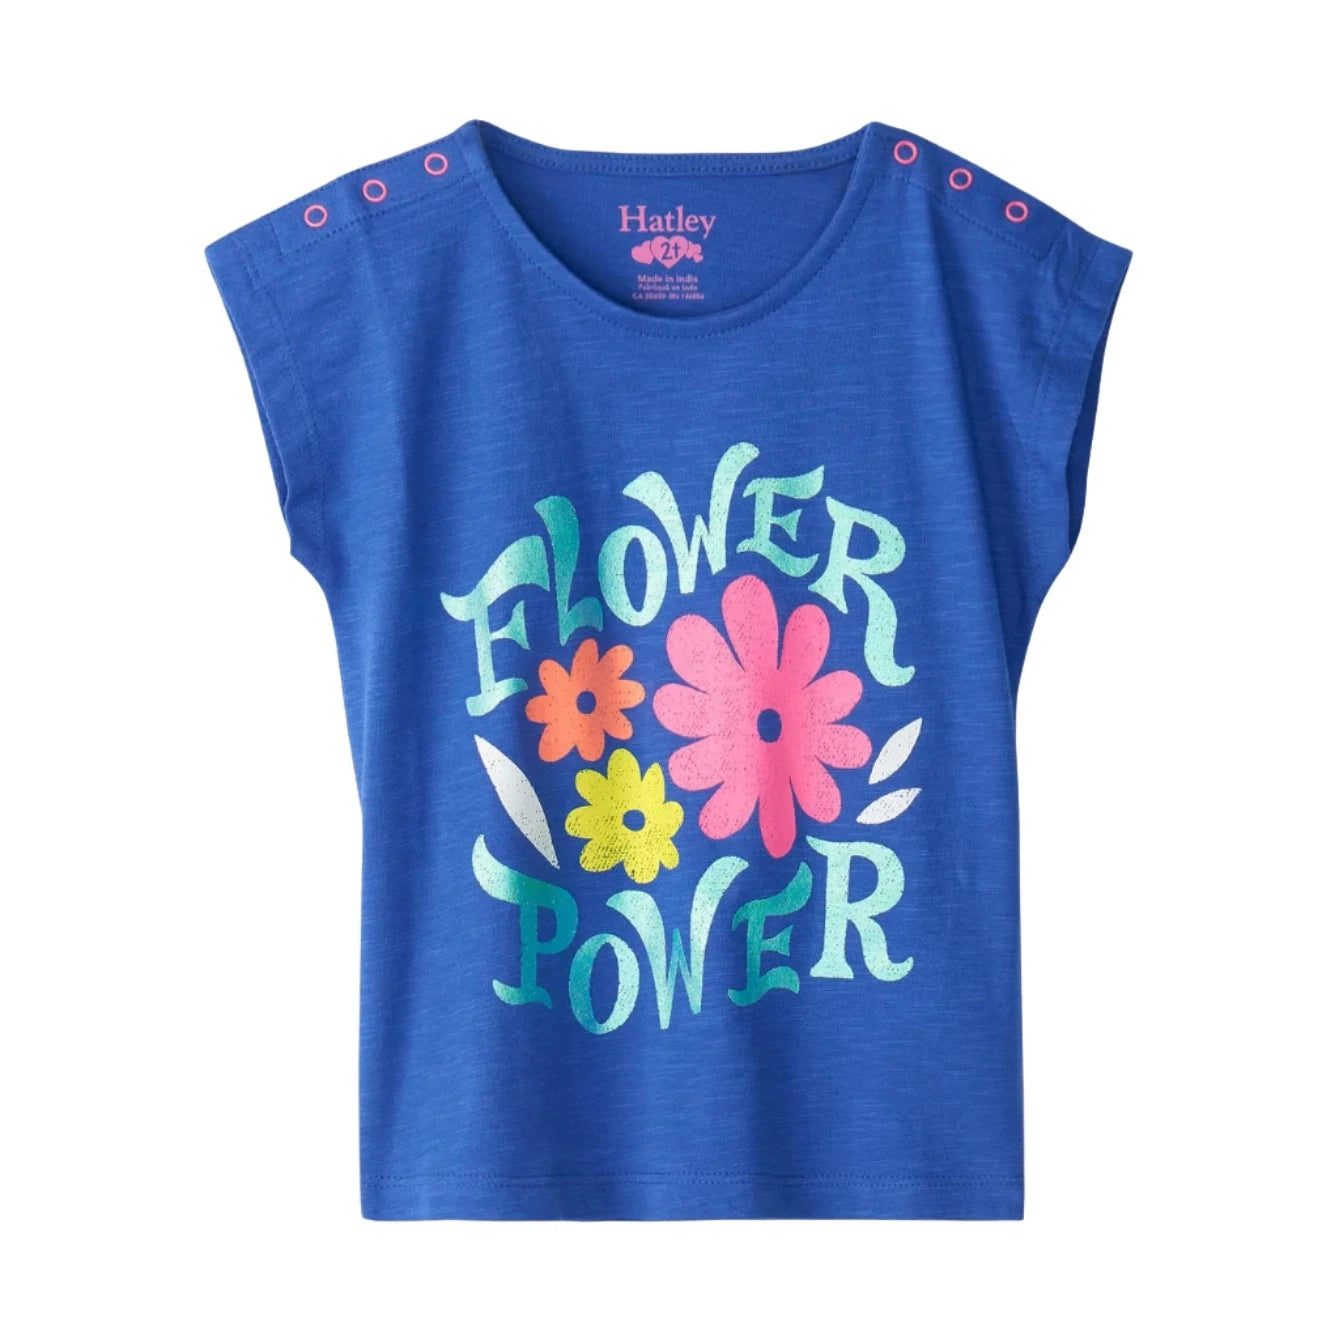 Hatley Baby Flower Power Snap Button Shirt, Flower Power, front view flat 